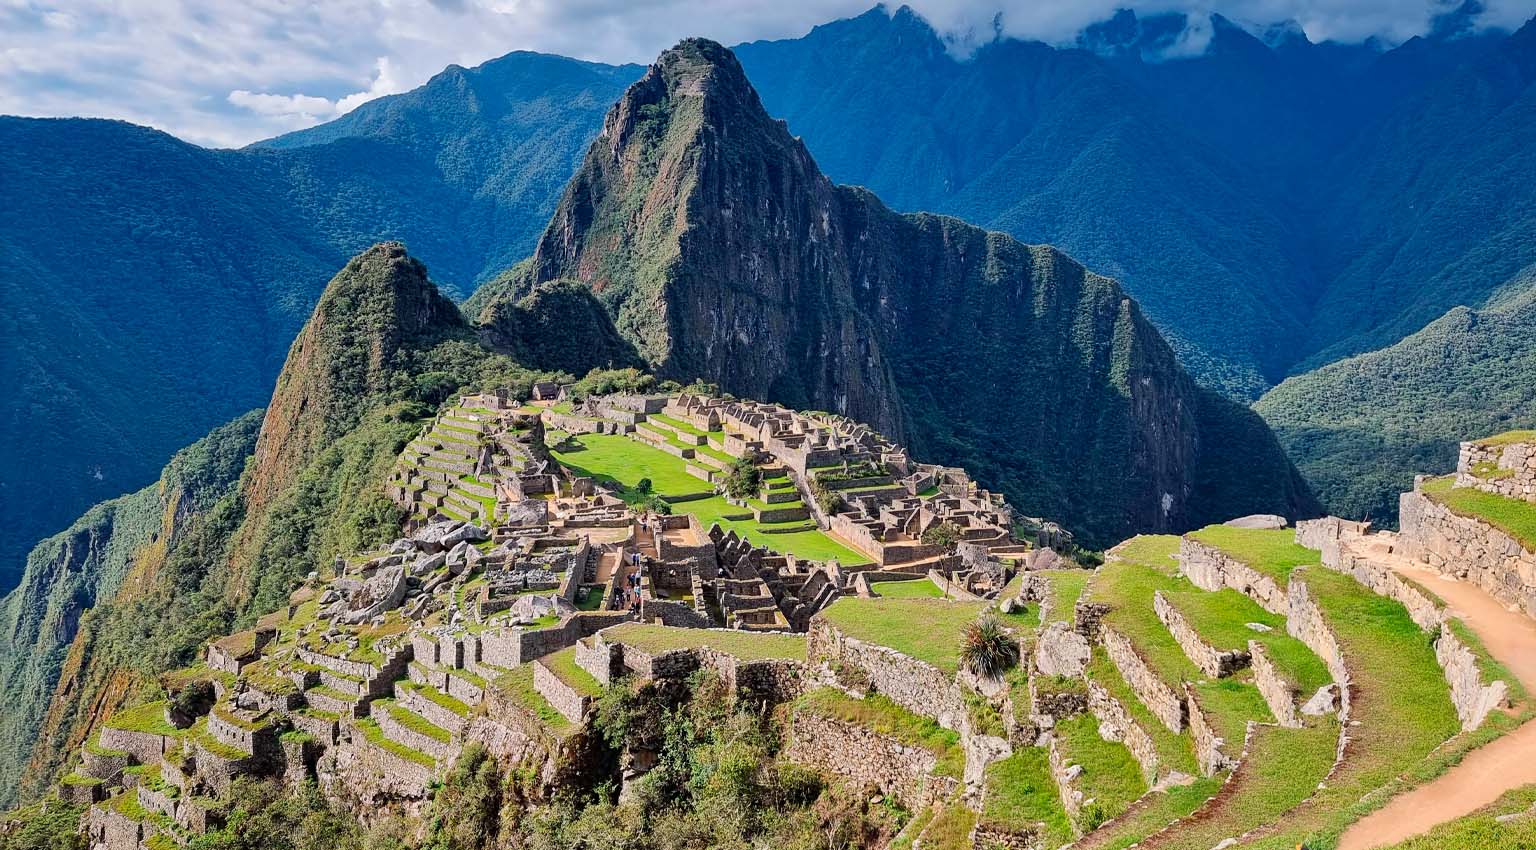 Hike Machu Picchu: Which Route Should You Choose?